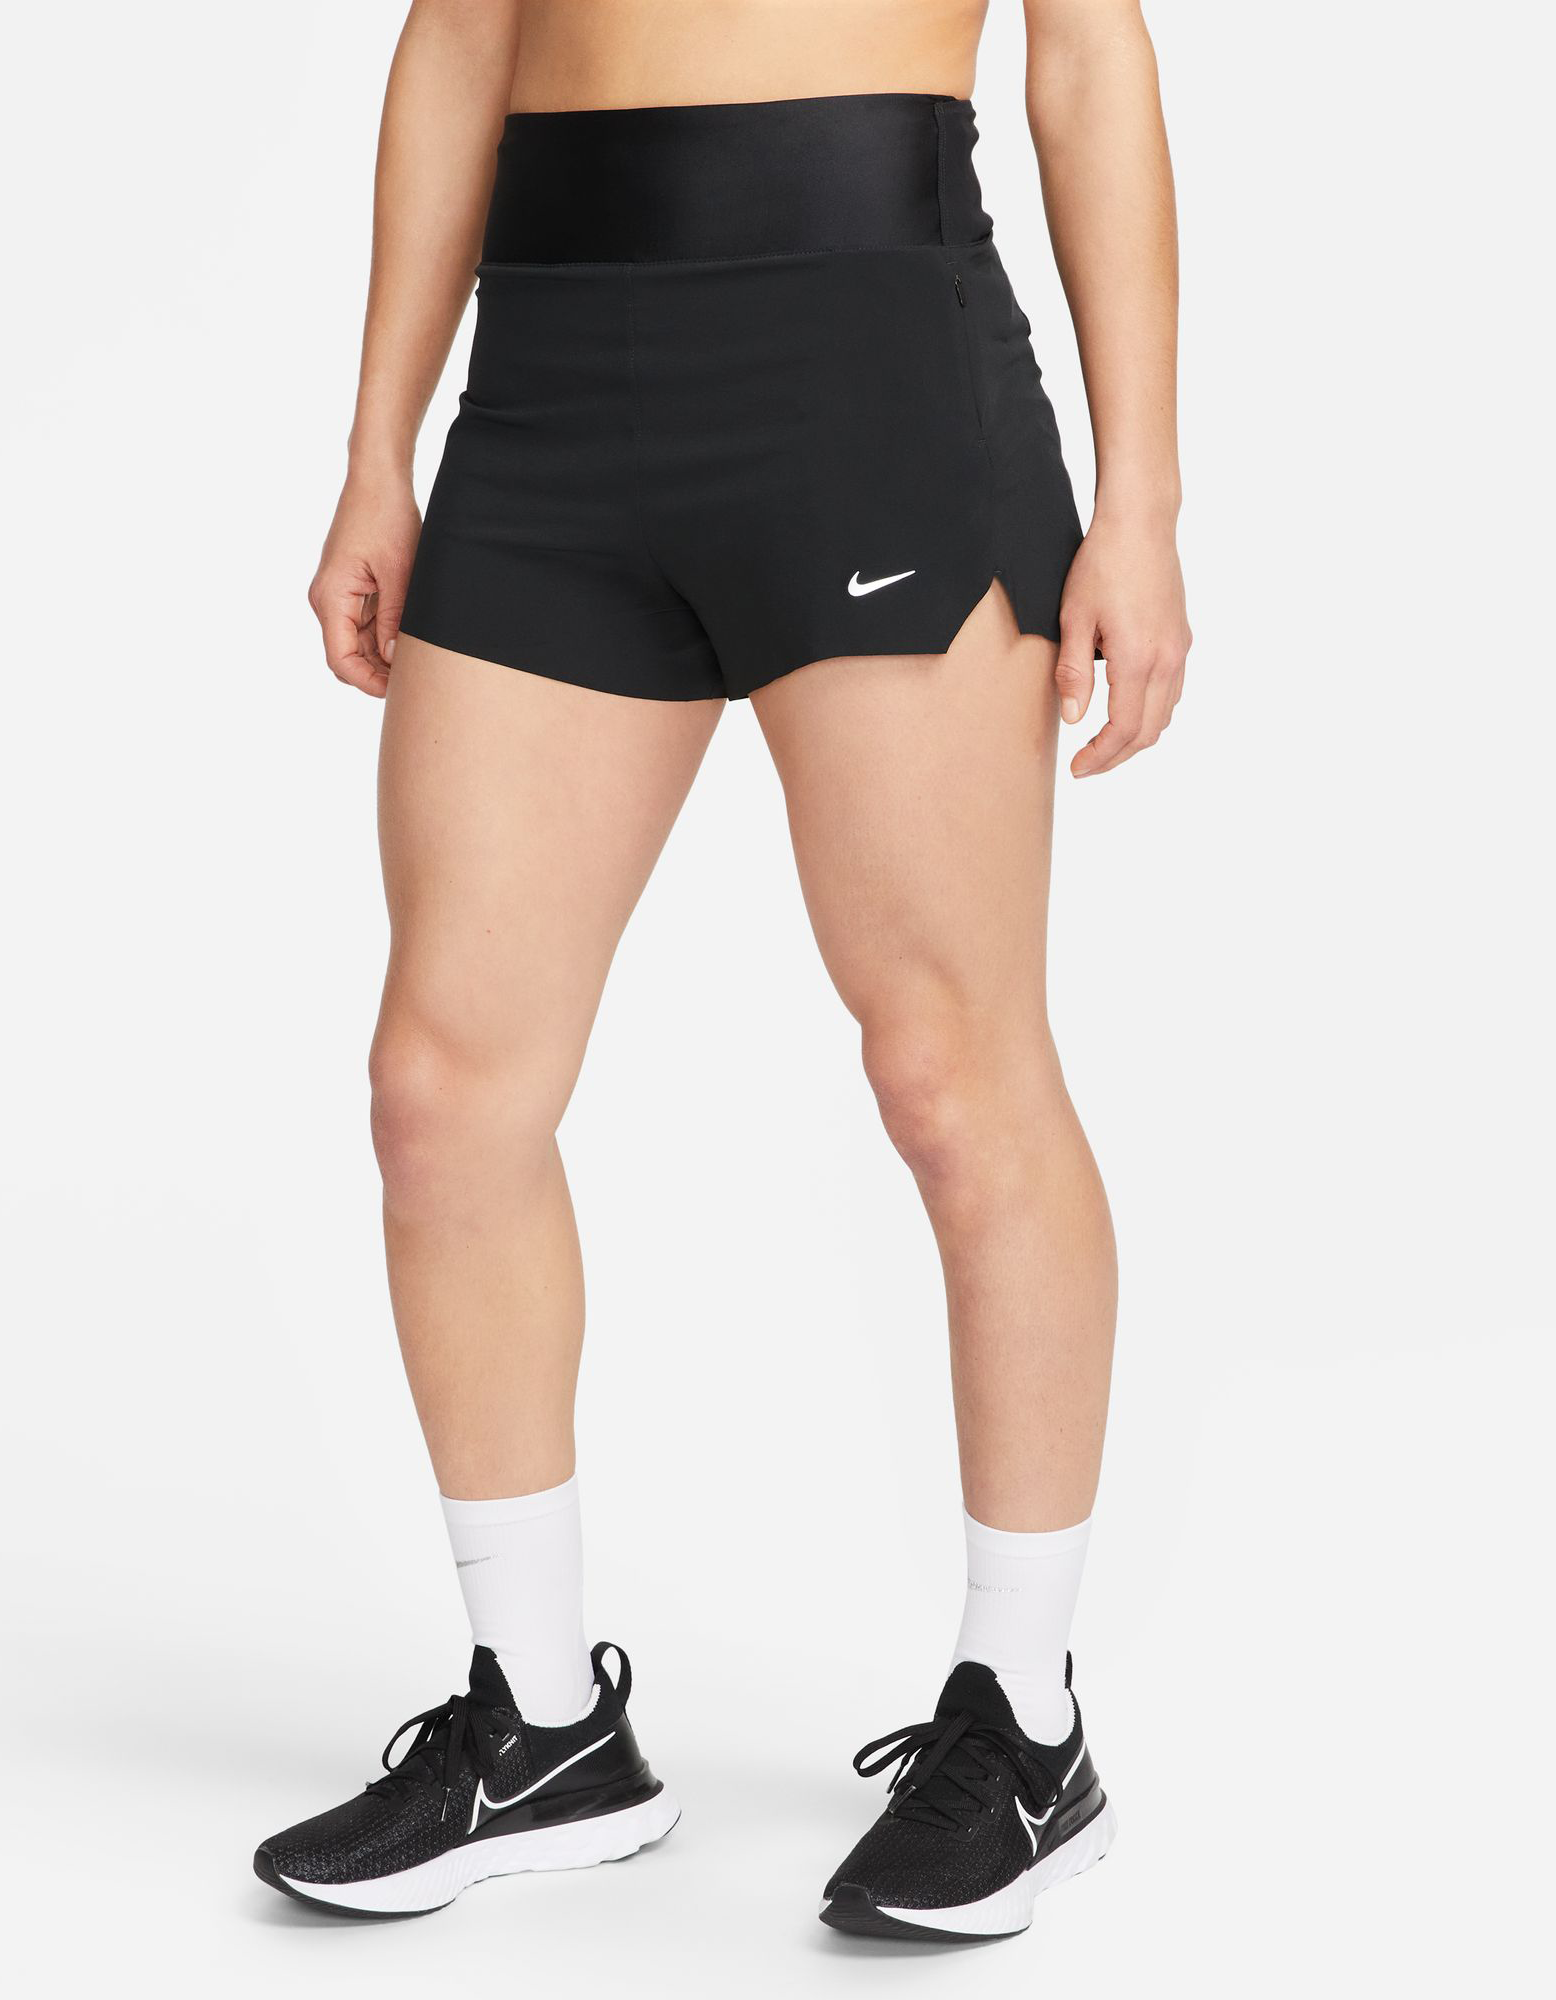 Nike Swift Shorts - Women's | Vancouver Running Company Inc.